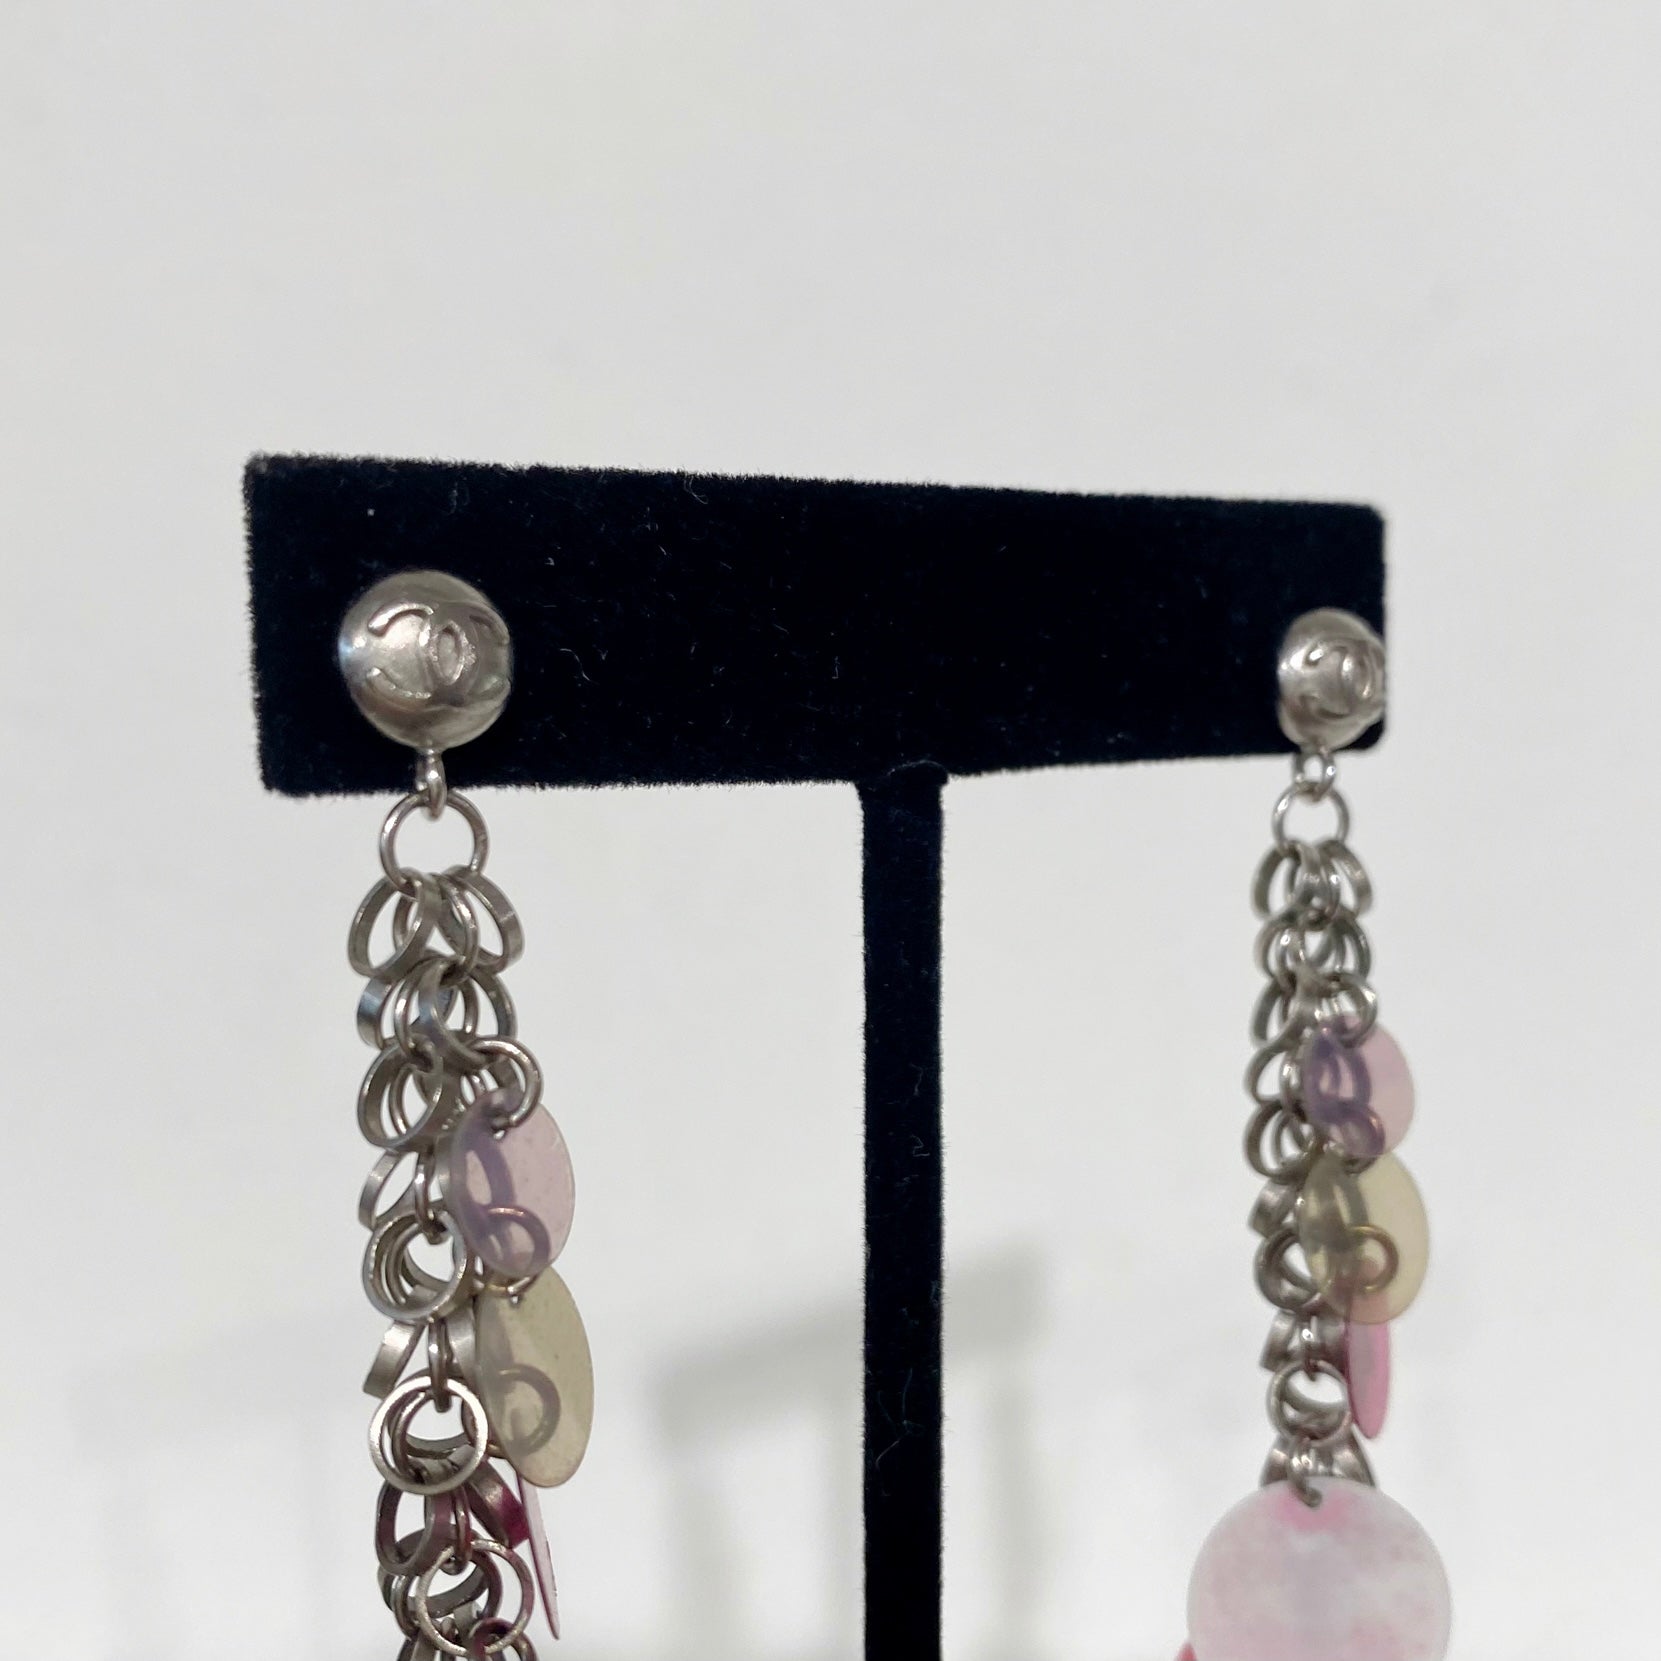 Chanel Pink Bubbly Charm Drop Earrings